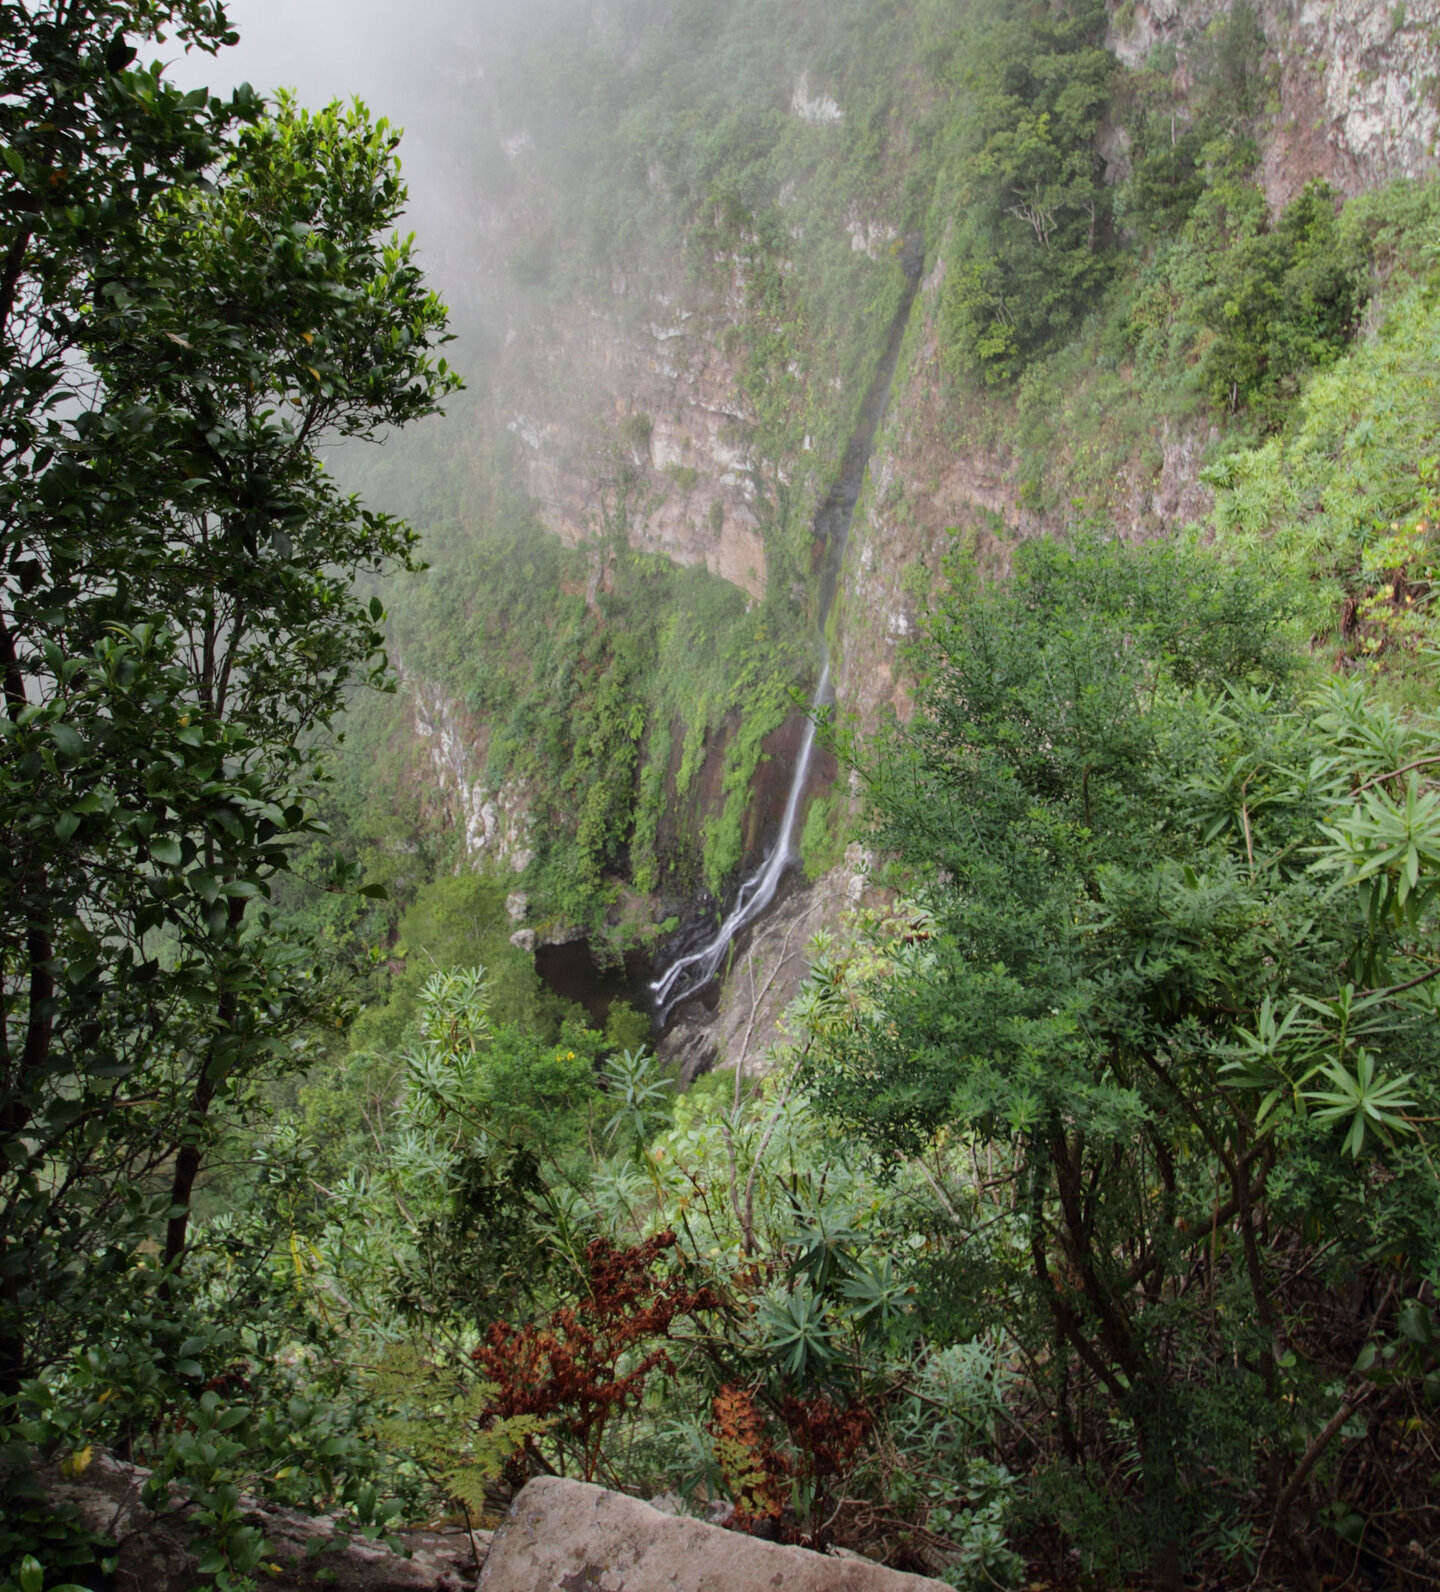 Blick auf den entlang der Steilwand hinabstürzenden Wasserfall